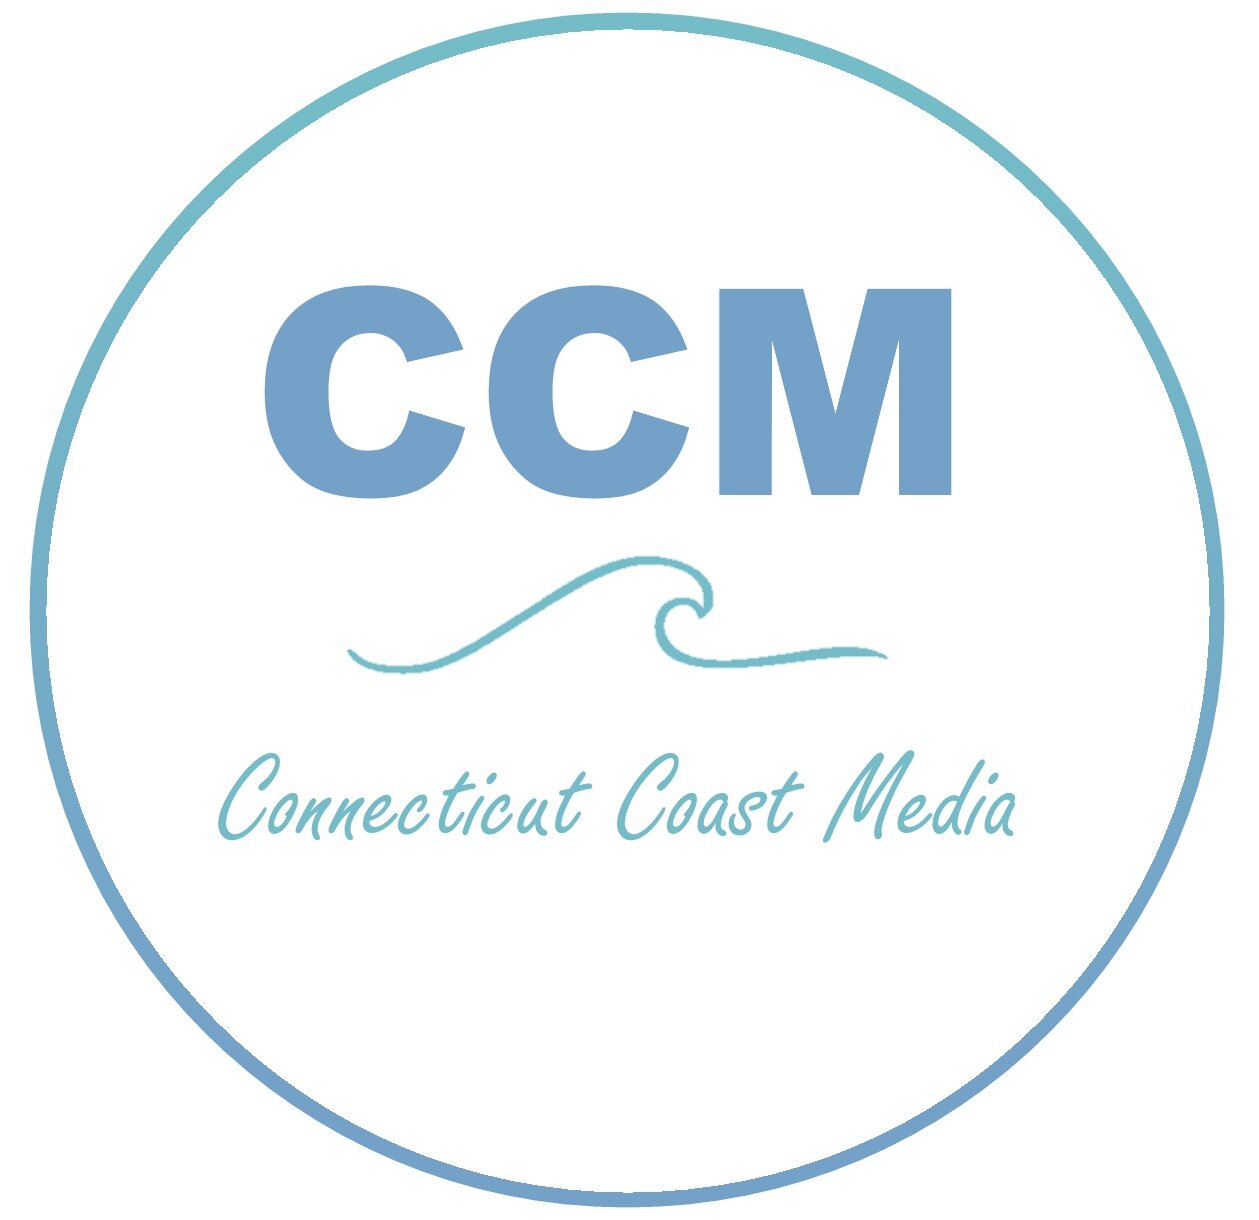 Company logo of Connecticut Coast Media